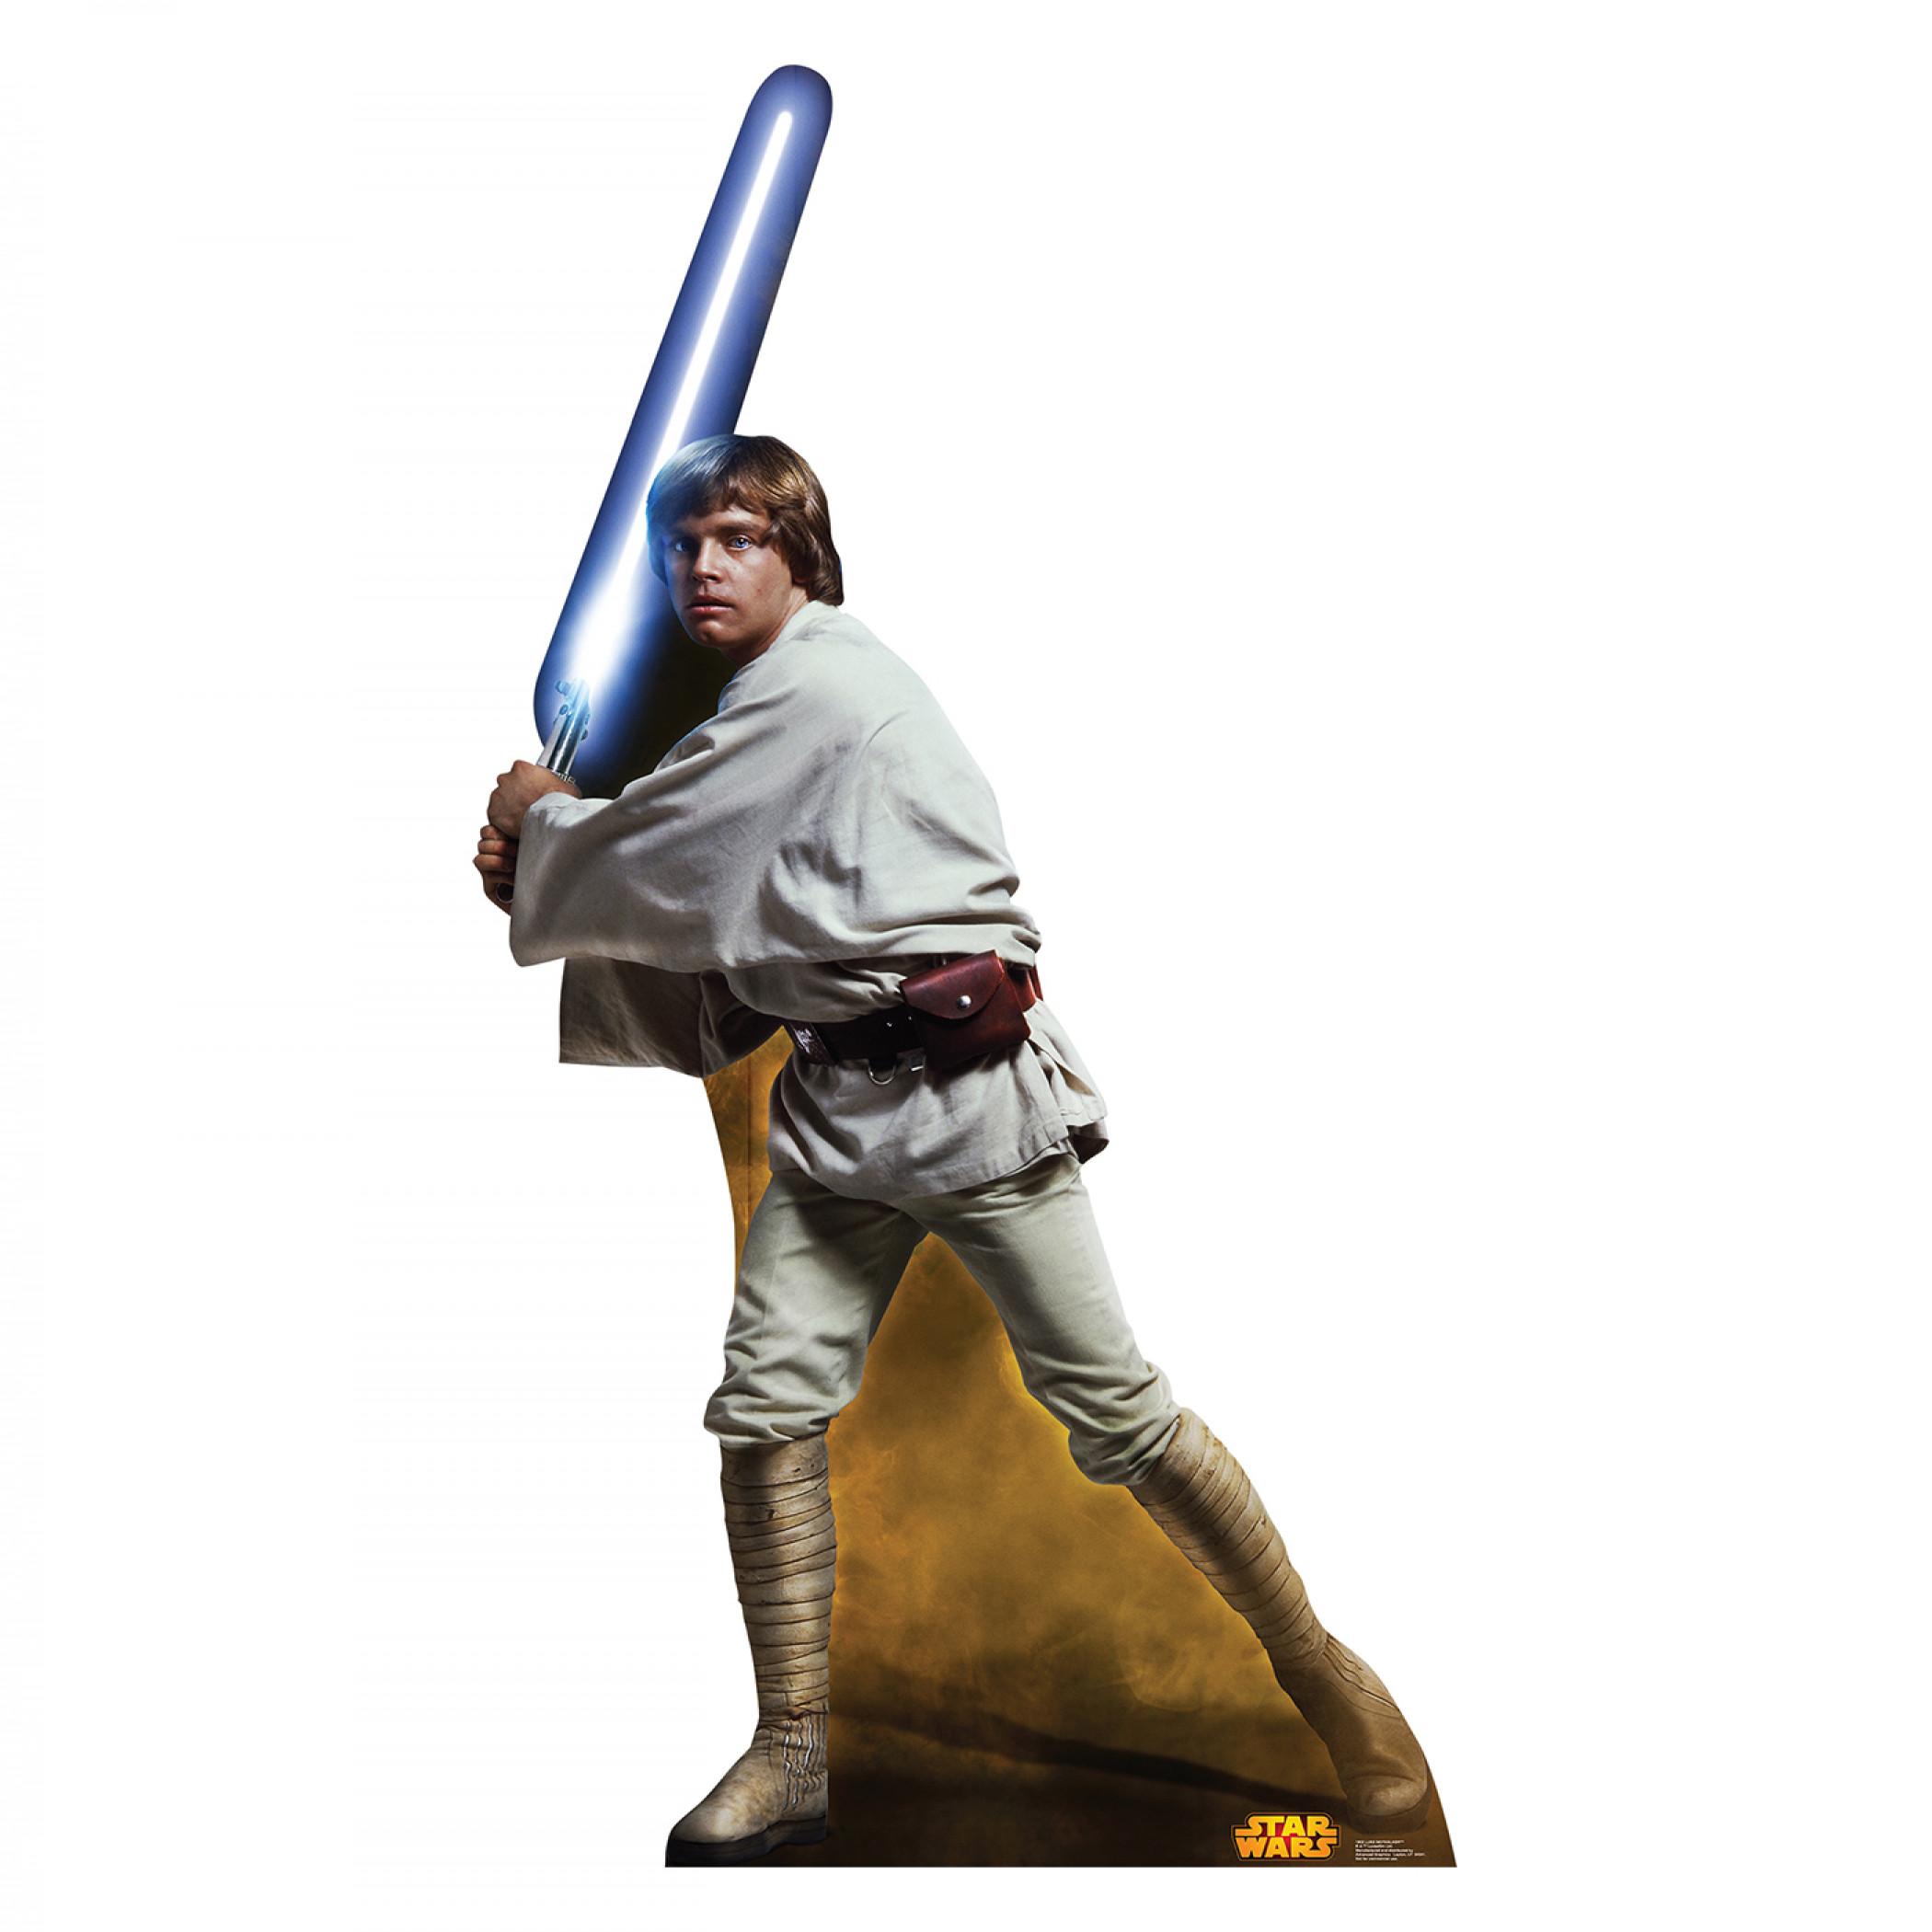 Star Wars Luke Skywalker Cardboard Stand Up